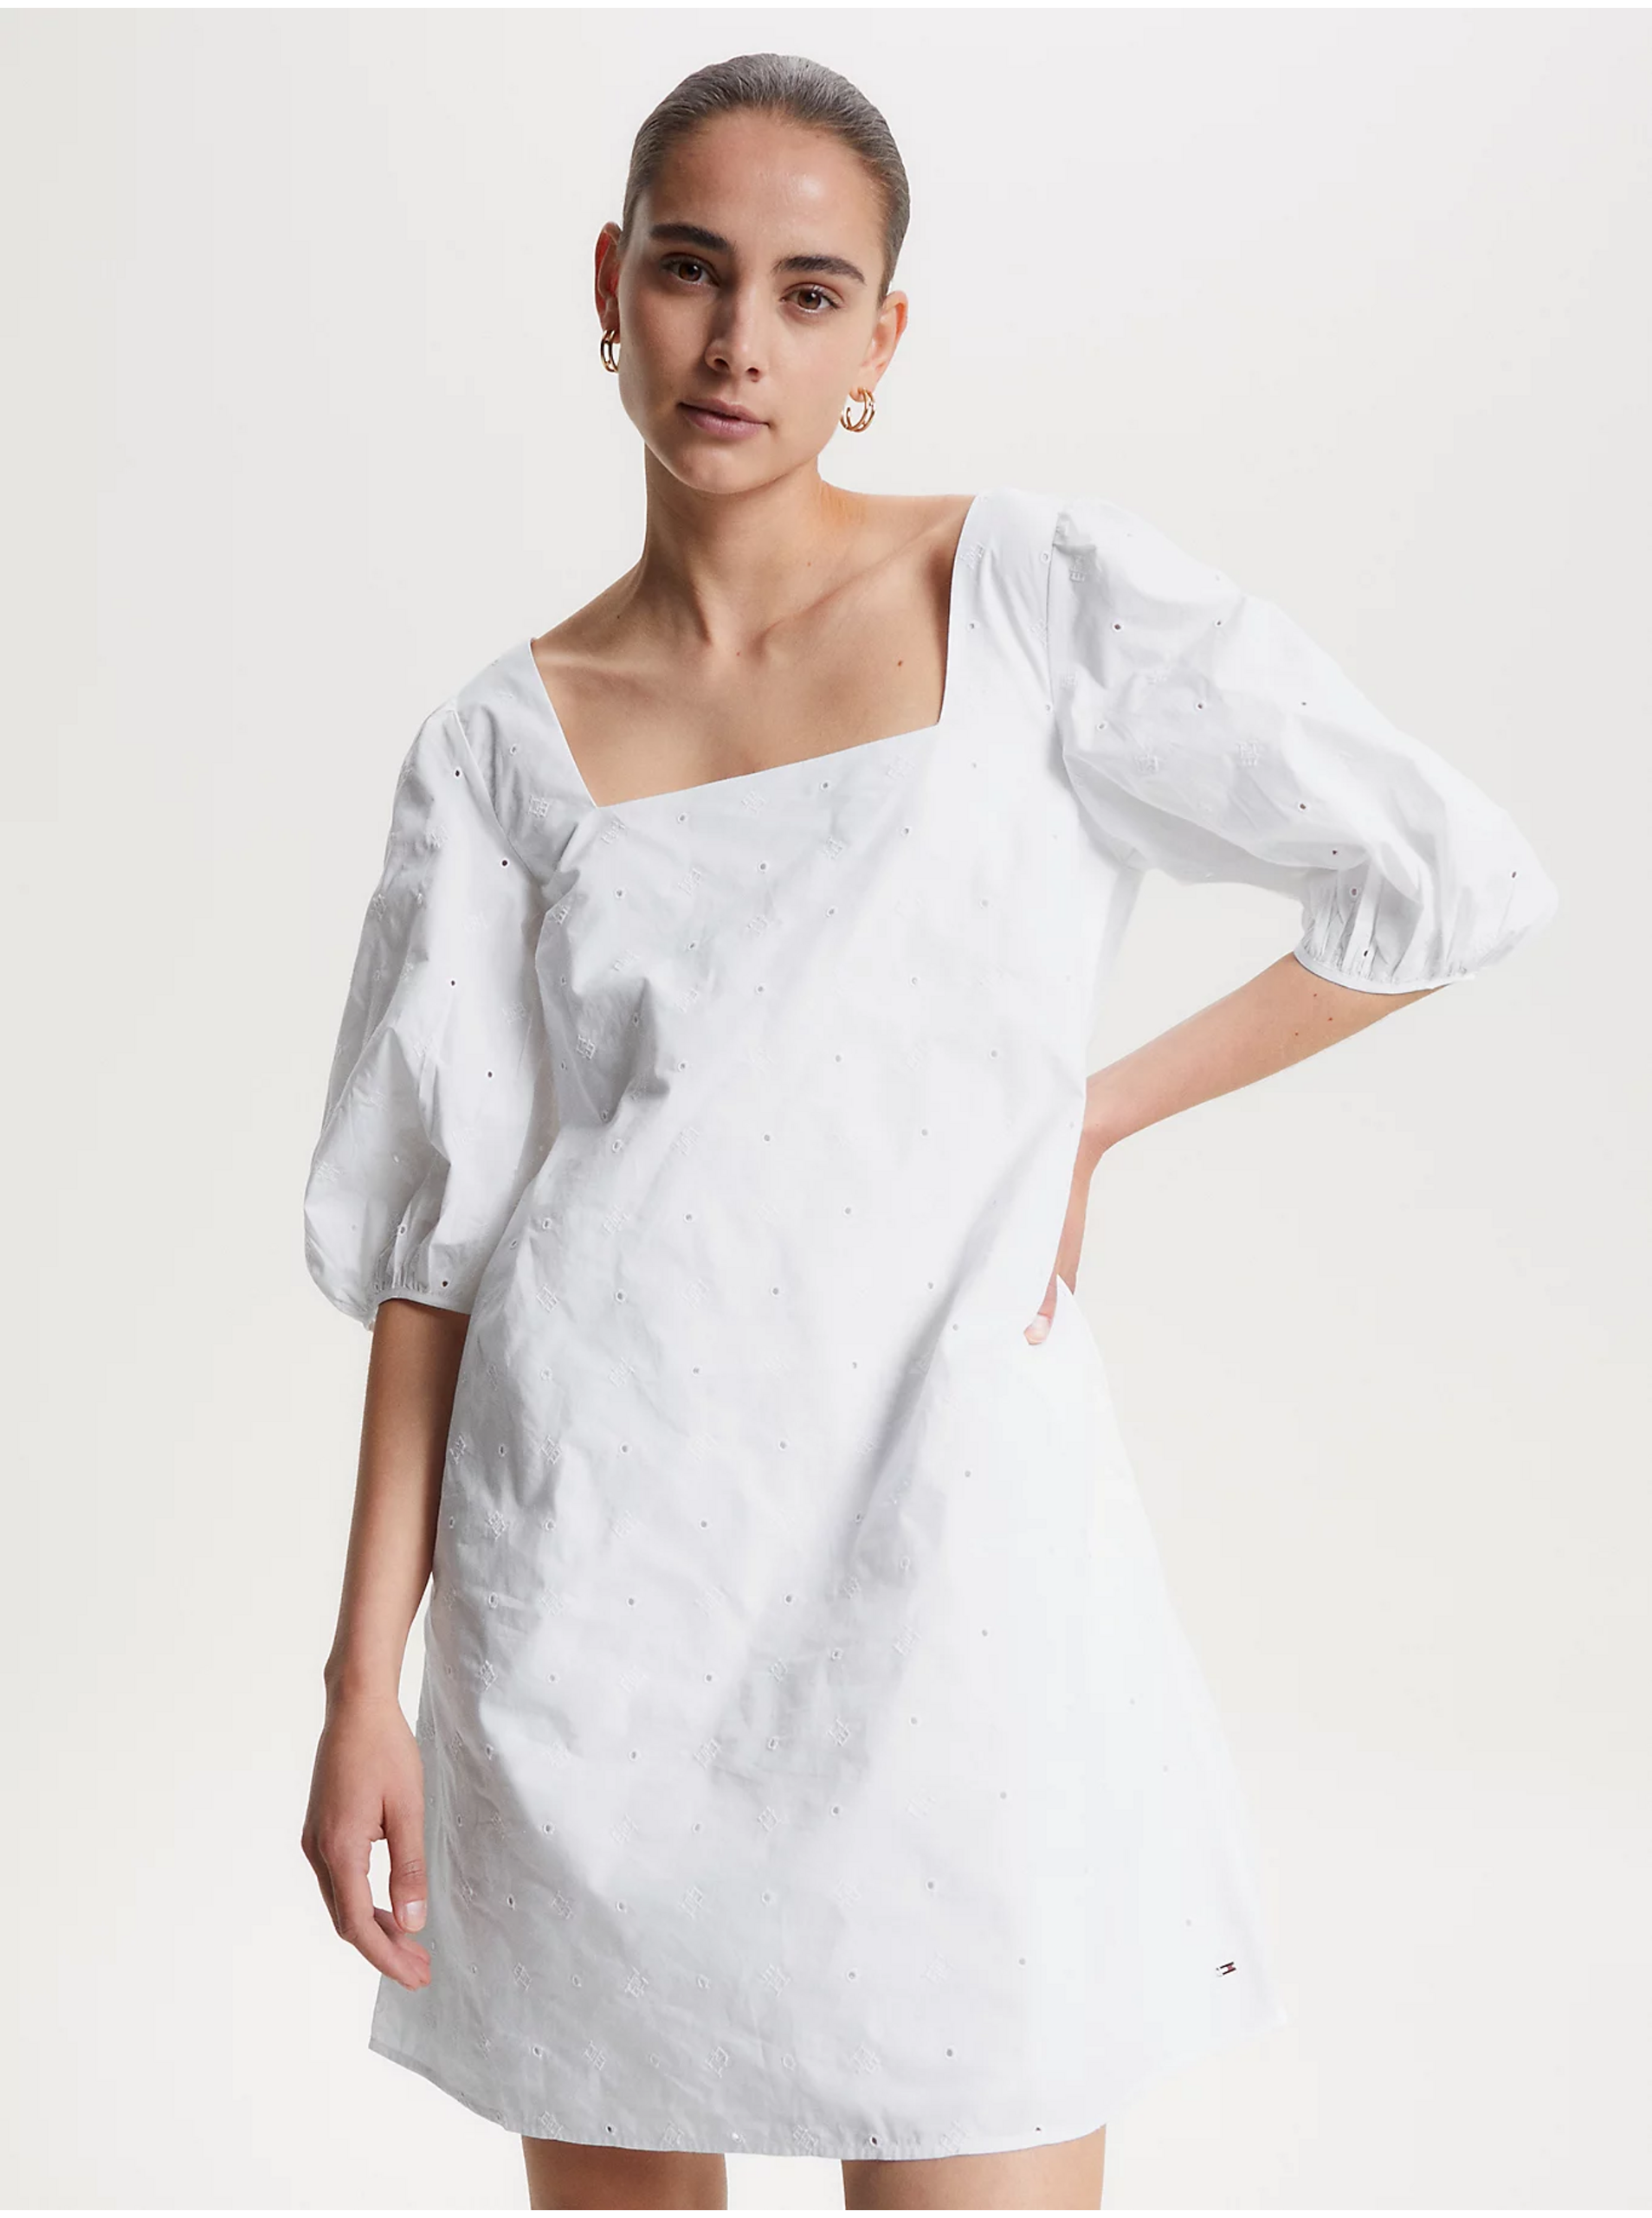 Lacno Biele dámske vzorované šaty Tommy Hilfiger